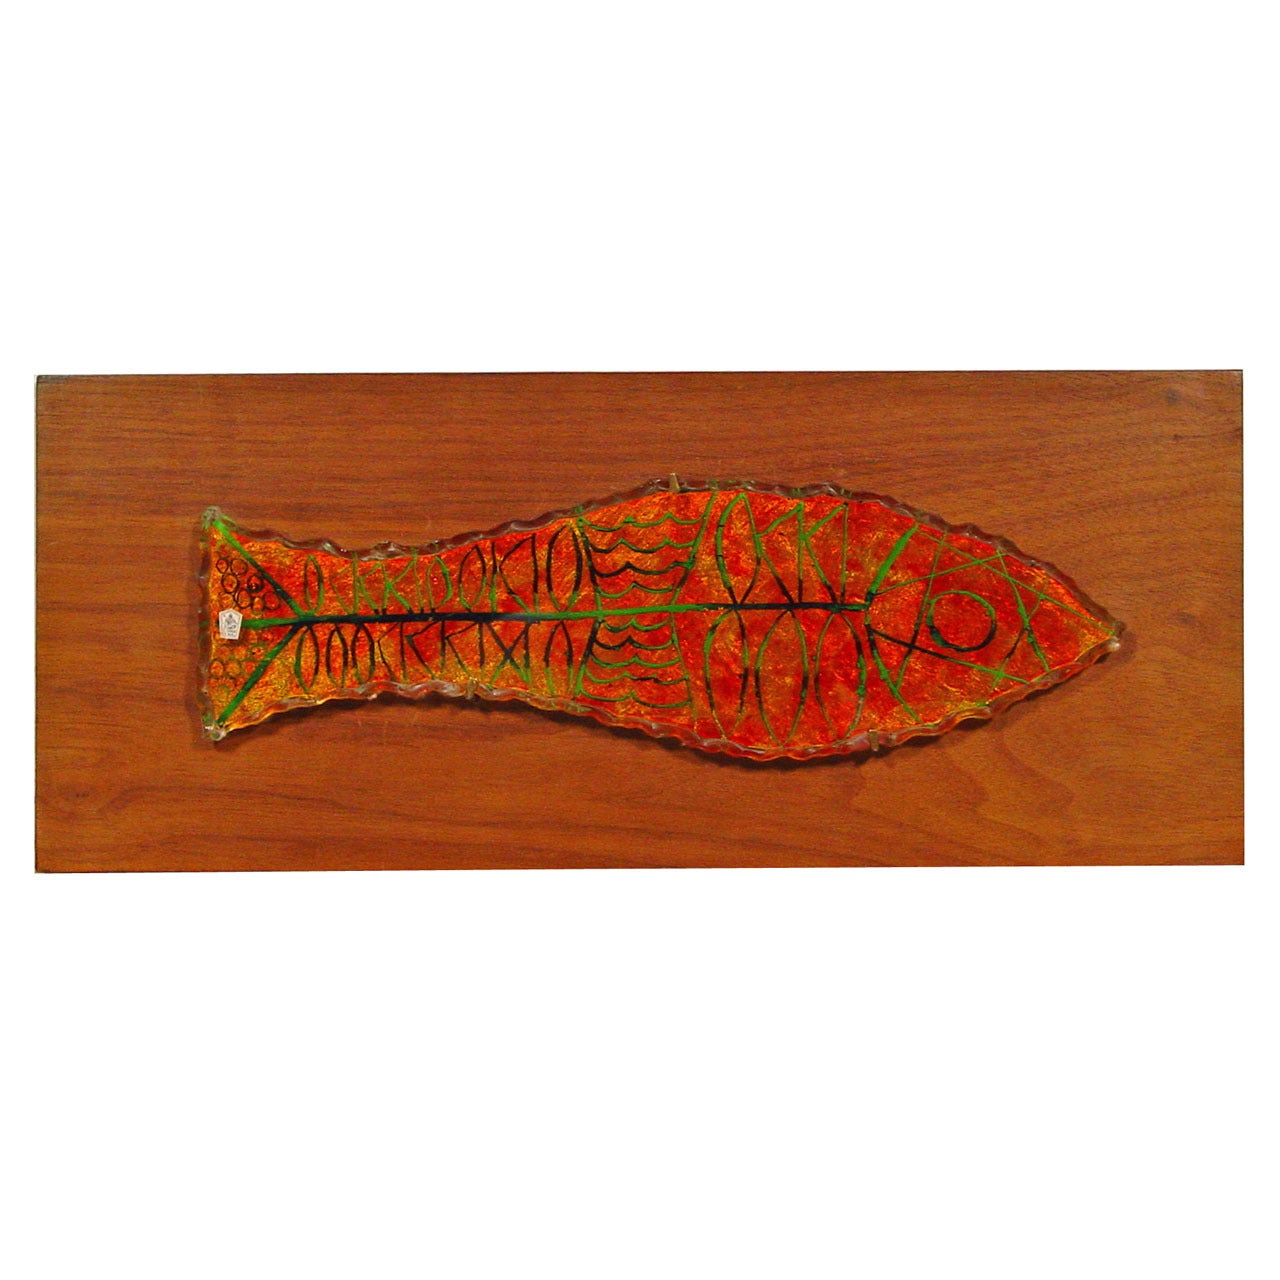 Erwin Walter Burger "Fish" Wall Panel For Sale